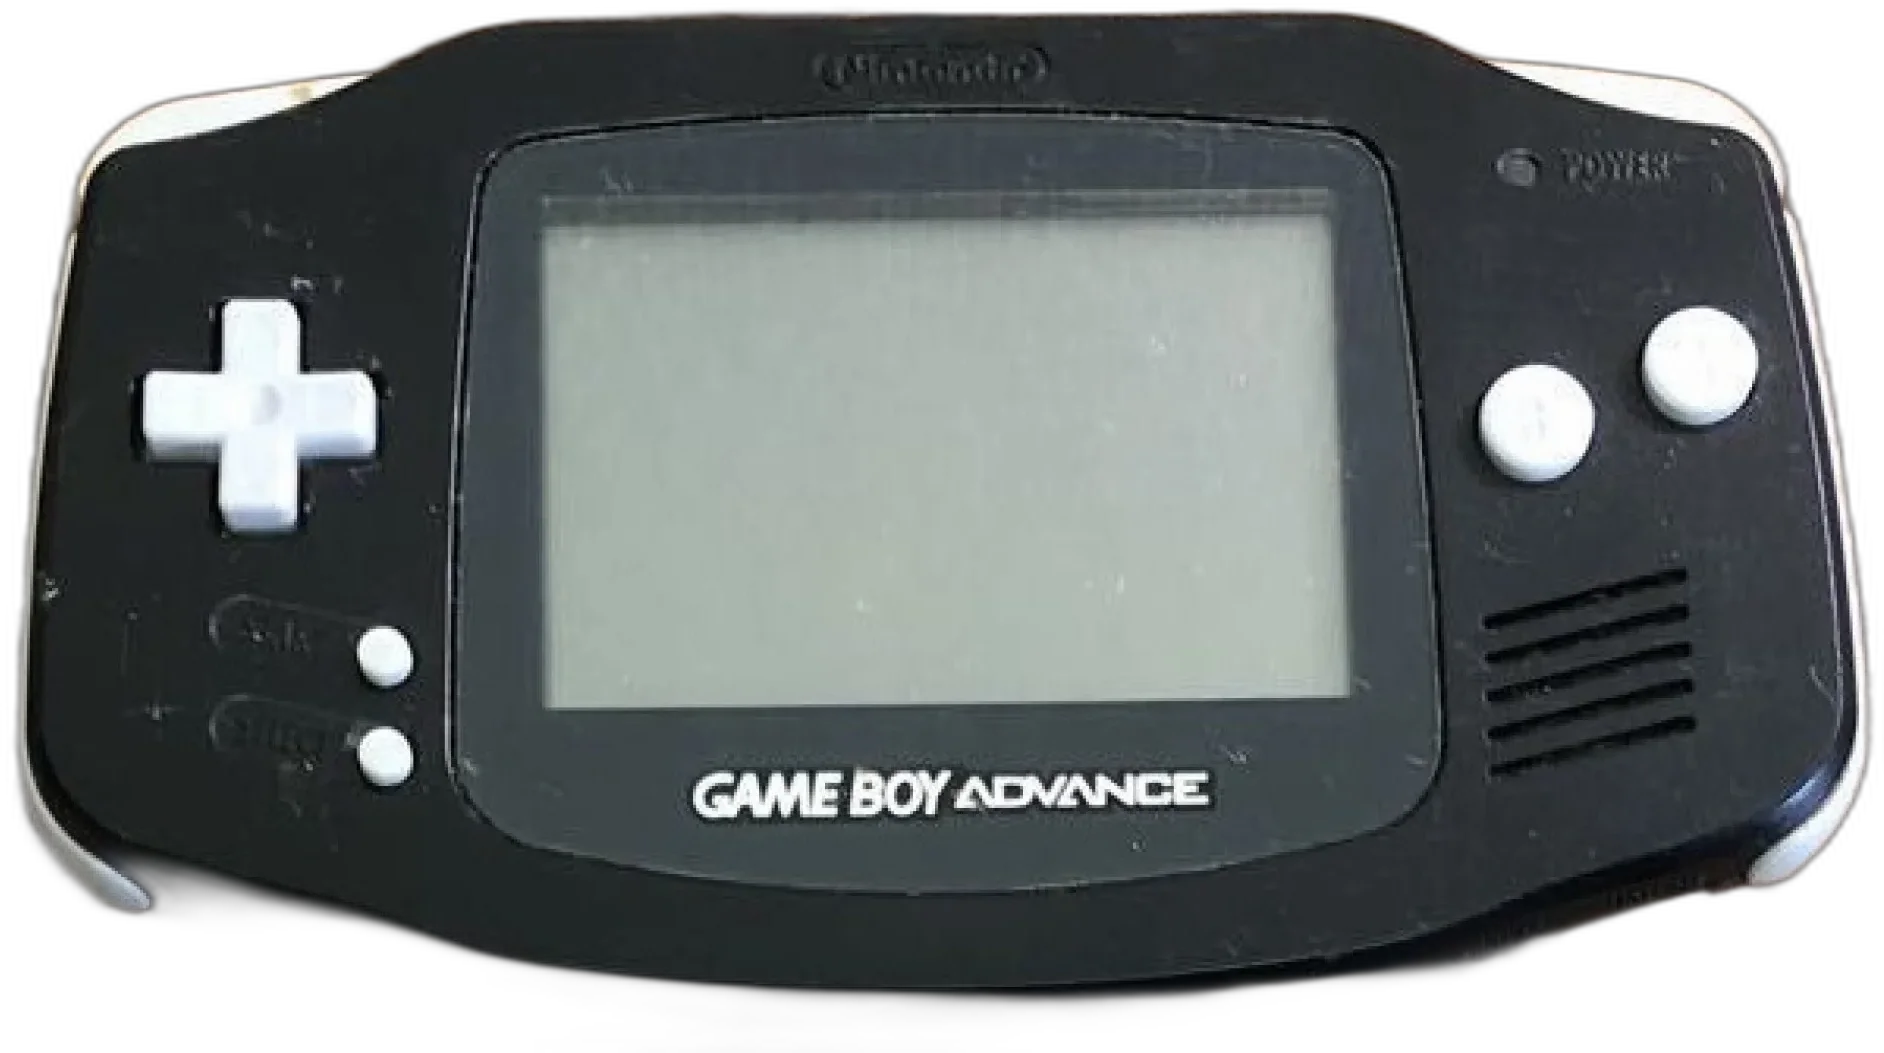  Nintendo Game Boy Advance Black Console [JP]